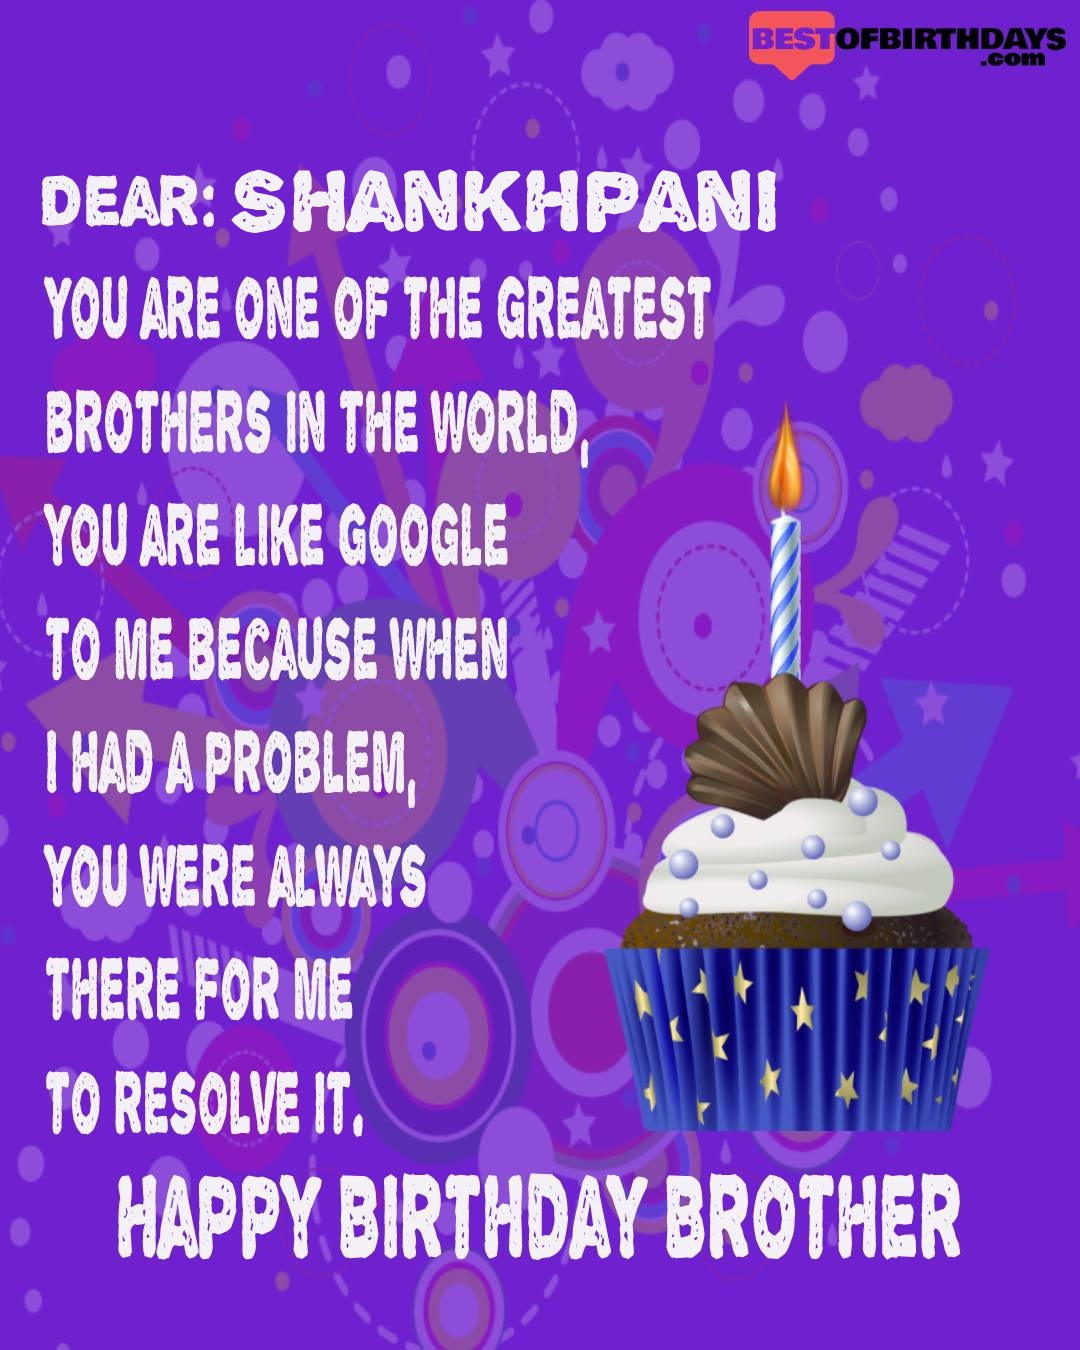 Happy birthday shankhpani bhai brother bro